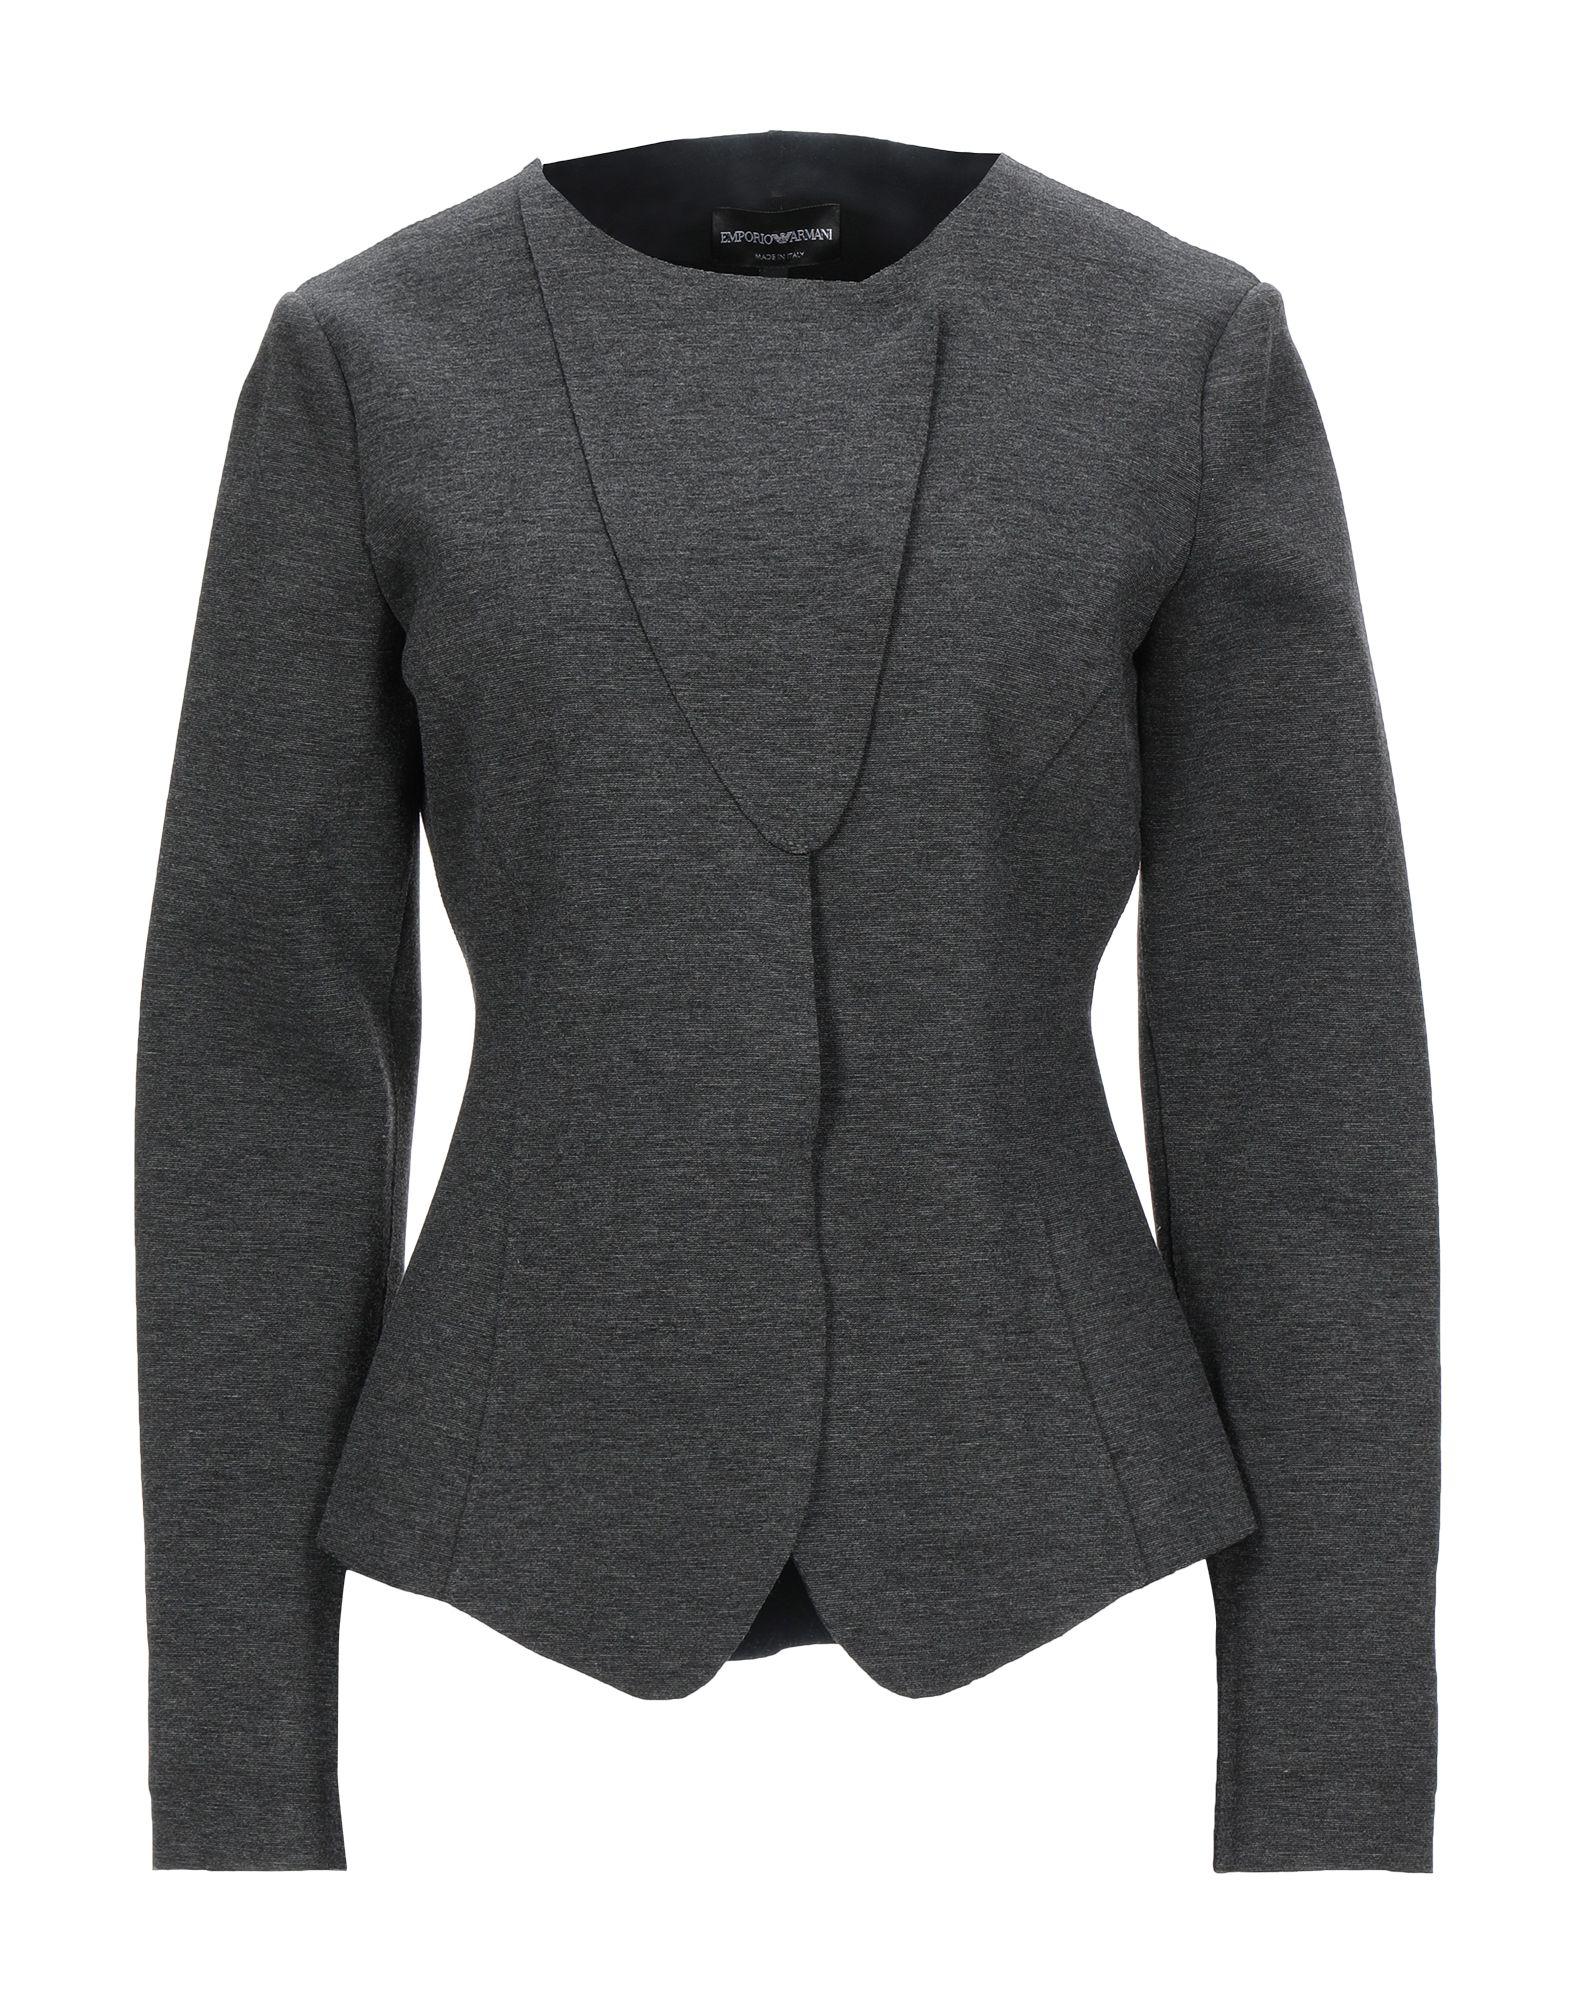 Emporio Armani Suit Jacket in Lead (Gray) - Lyst